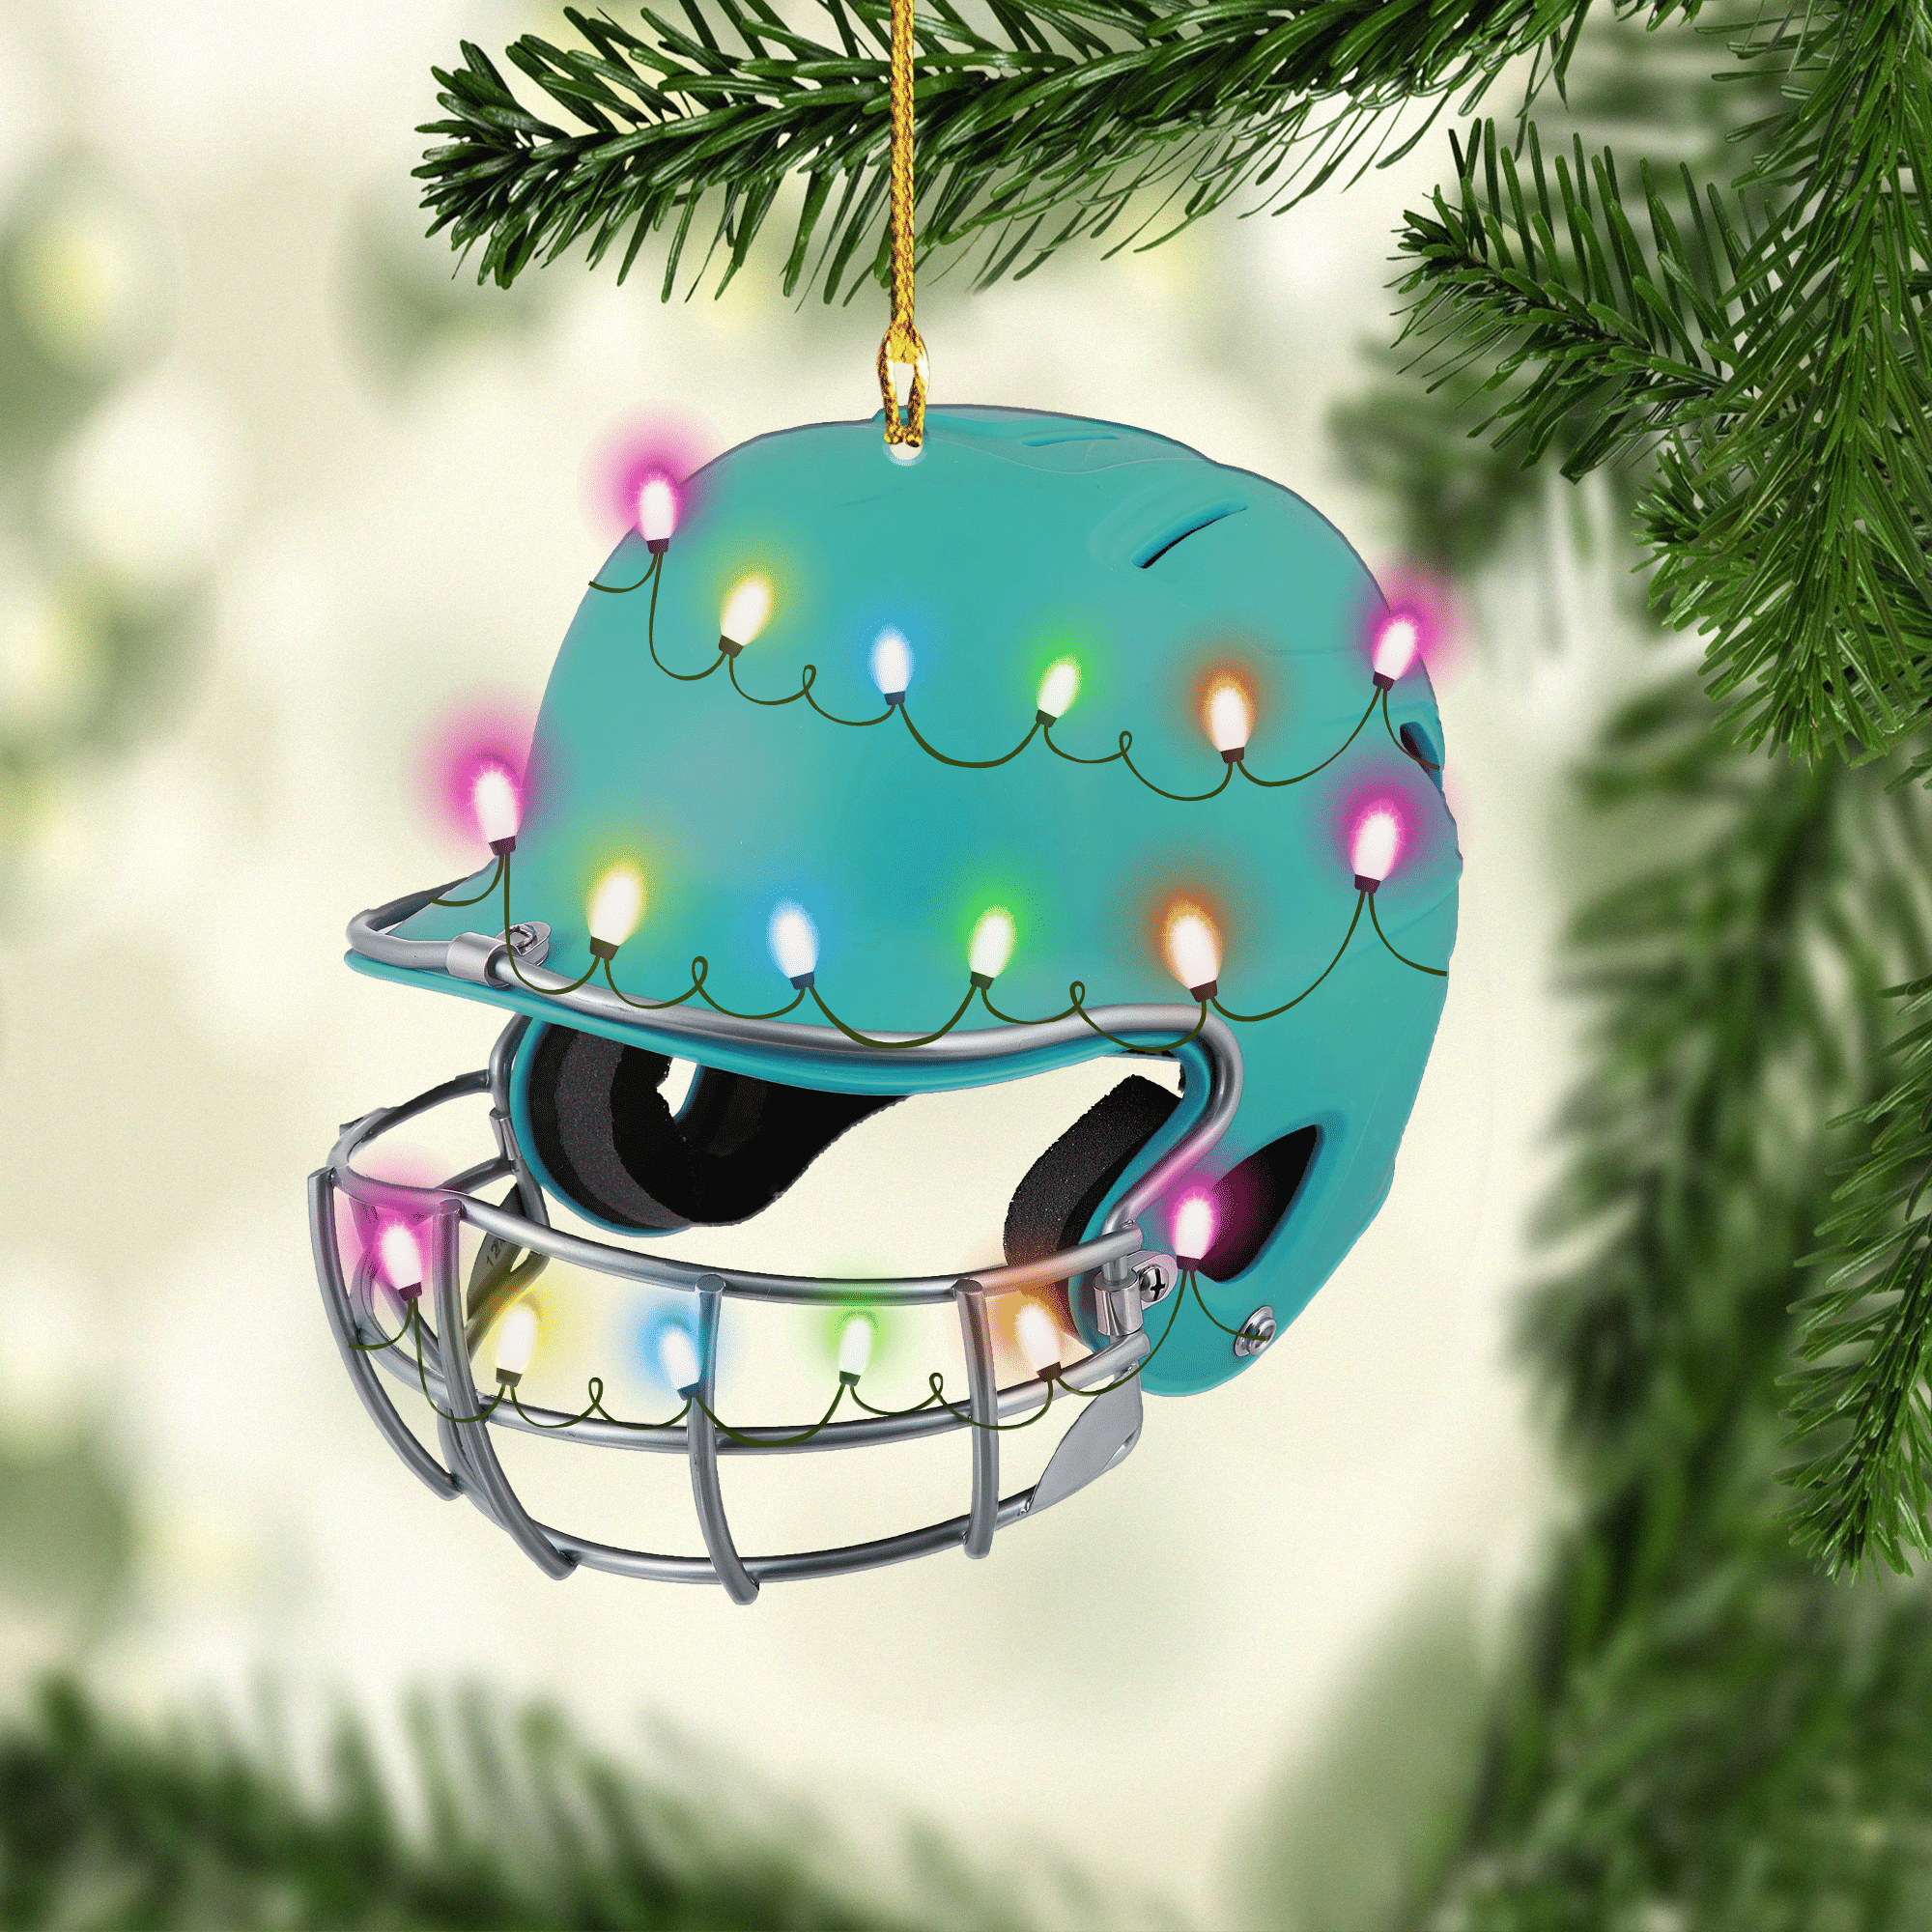 Any Color Softball Batting Helmet Christmas Acrylic Shaped Ornaments/ Gift for Son Men